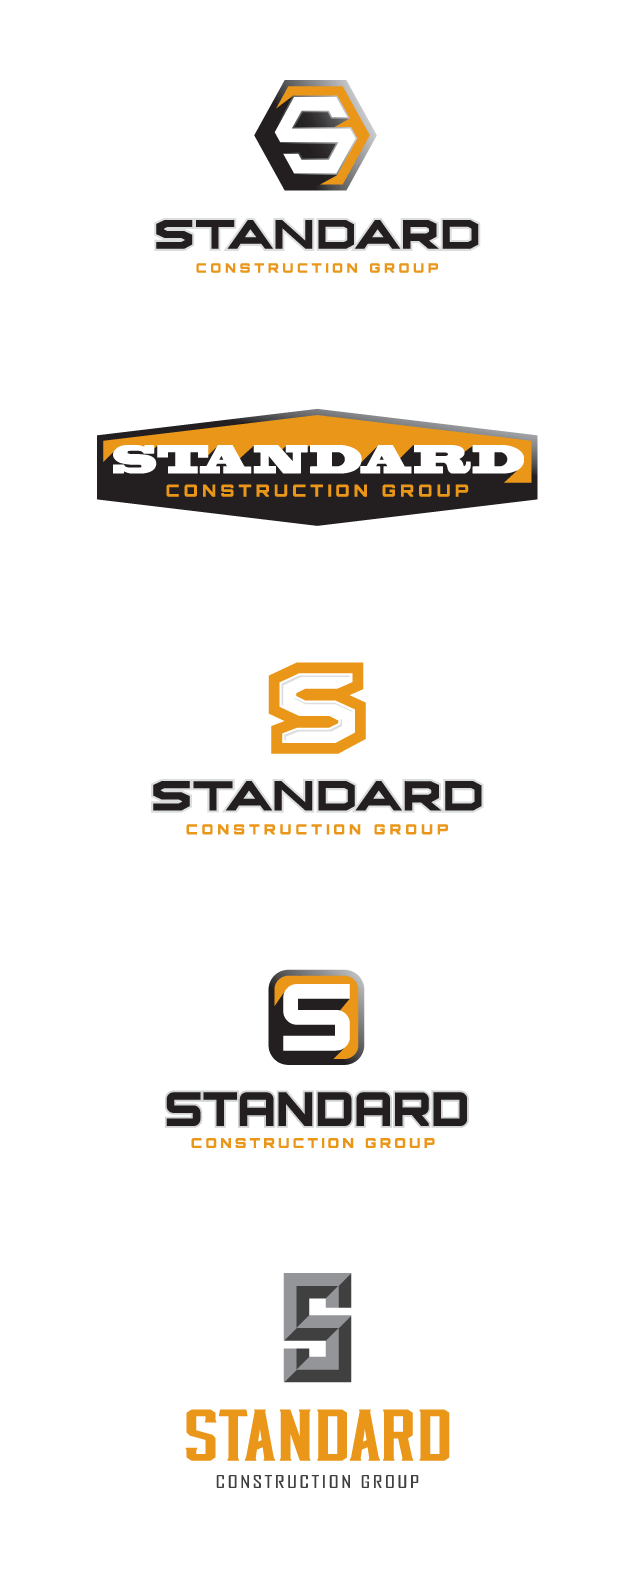 St. Louis logo design for Standard Construction Group